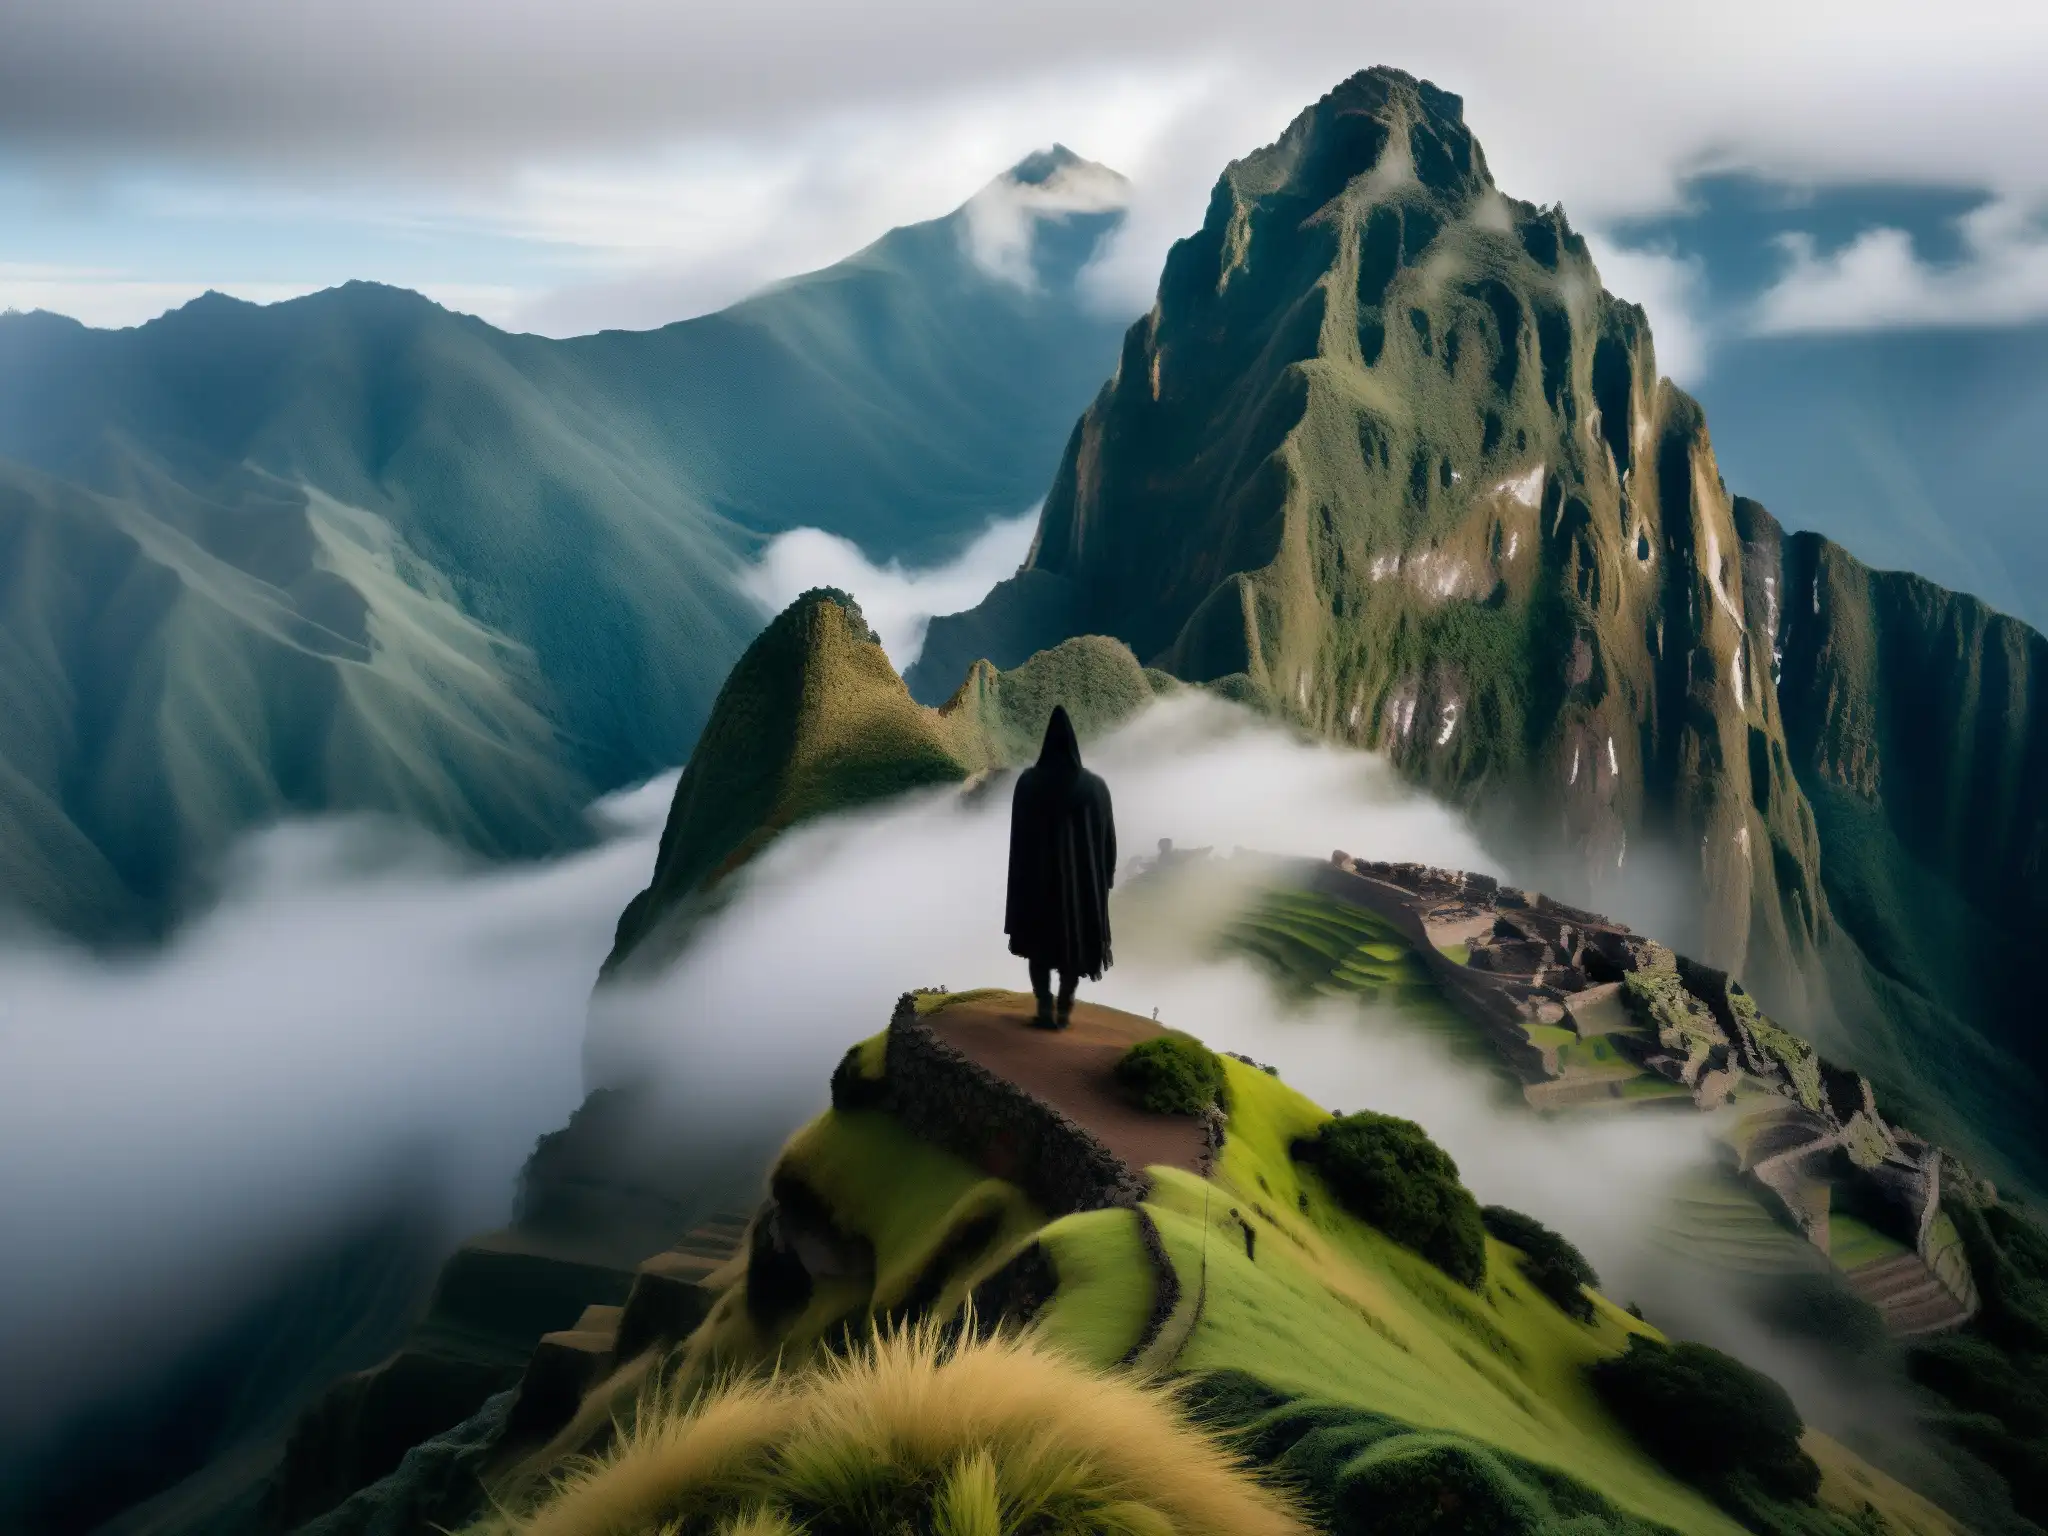 Figura solitaria en la neblina de una montaña peruana, evocando la mítica La Viudita leyenda peruana